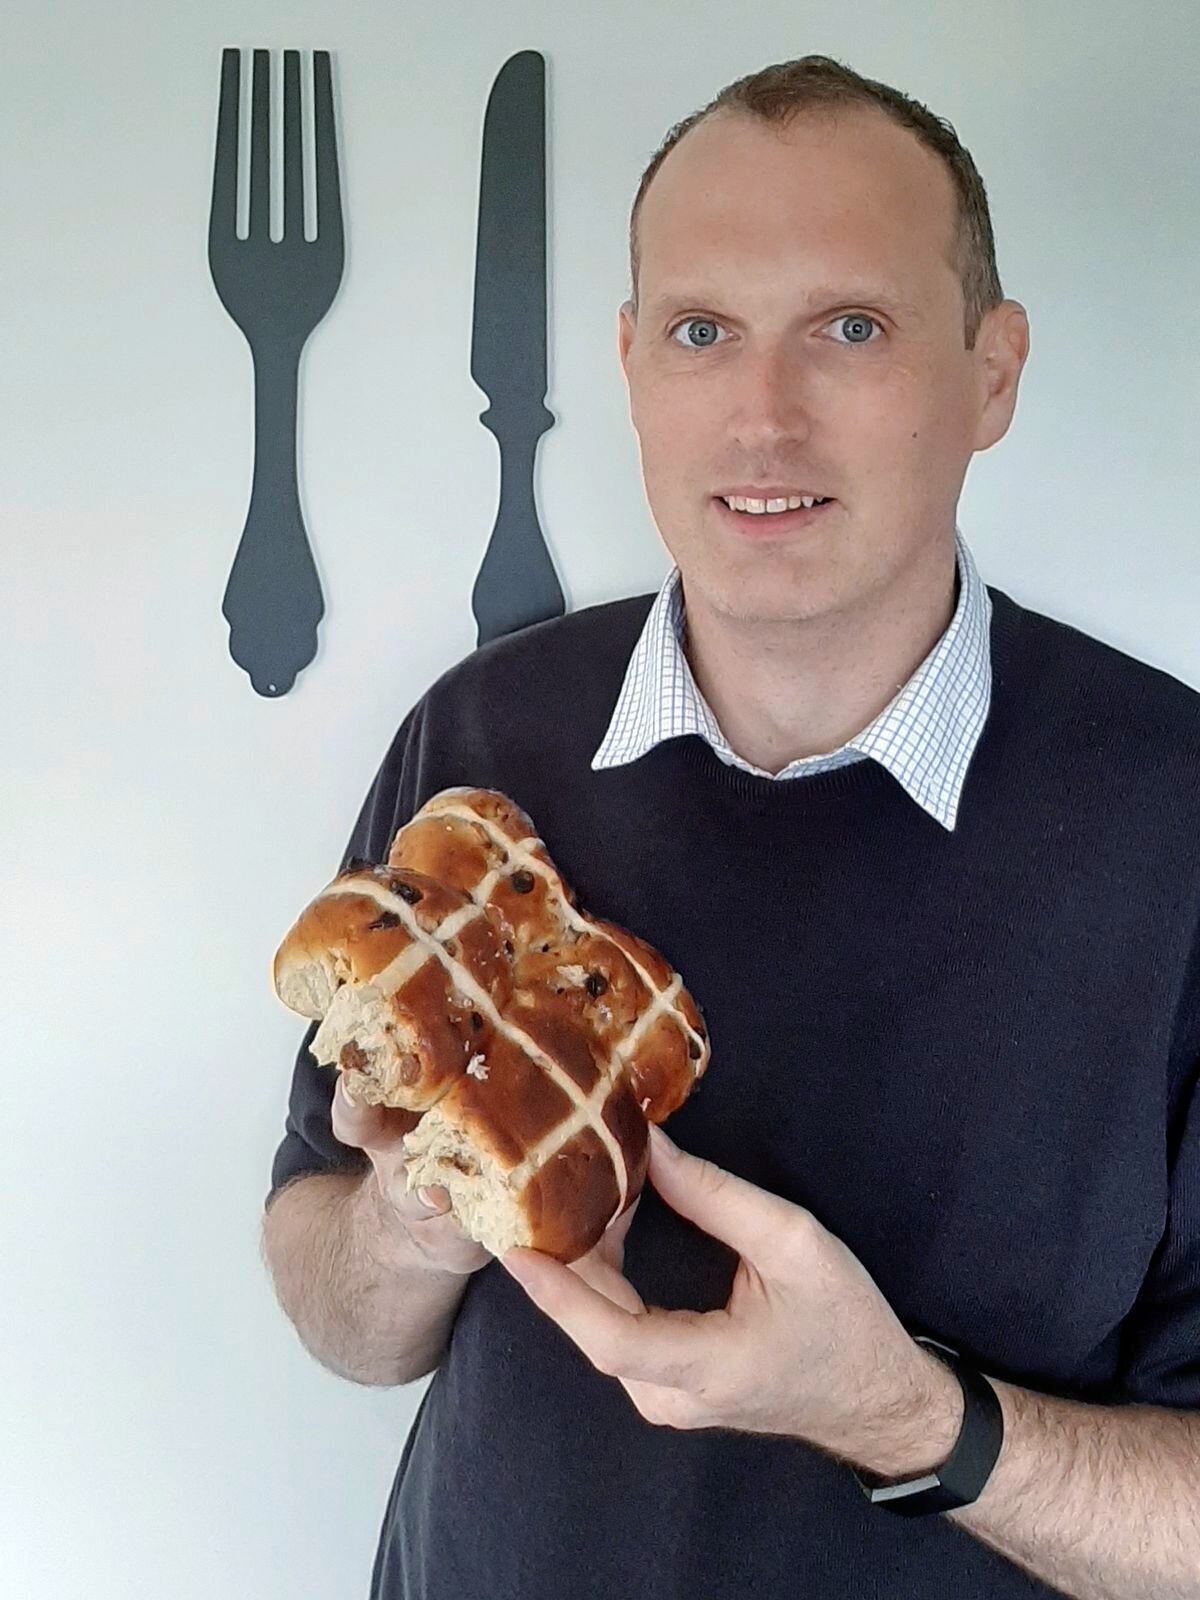 Stephen Glencross with his winning hot cross buns. (29400195)